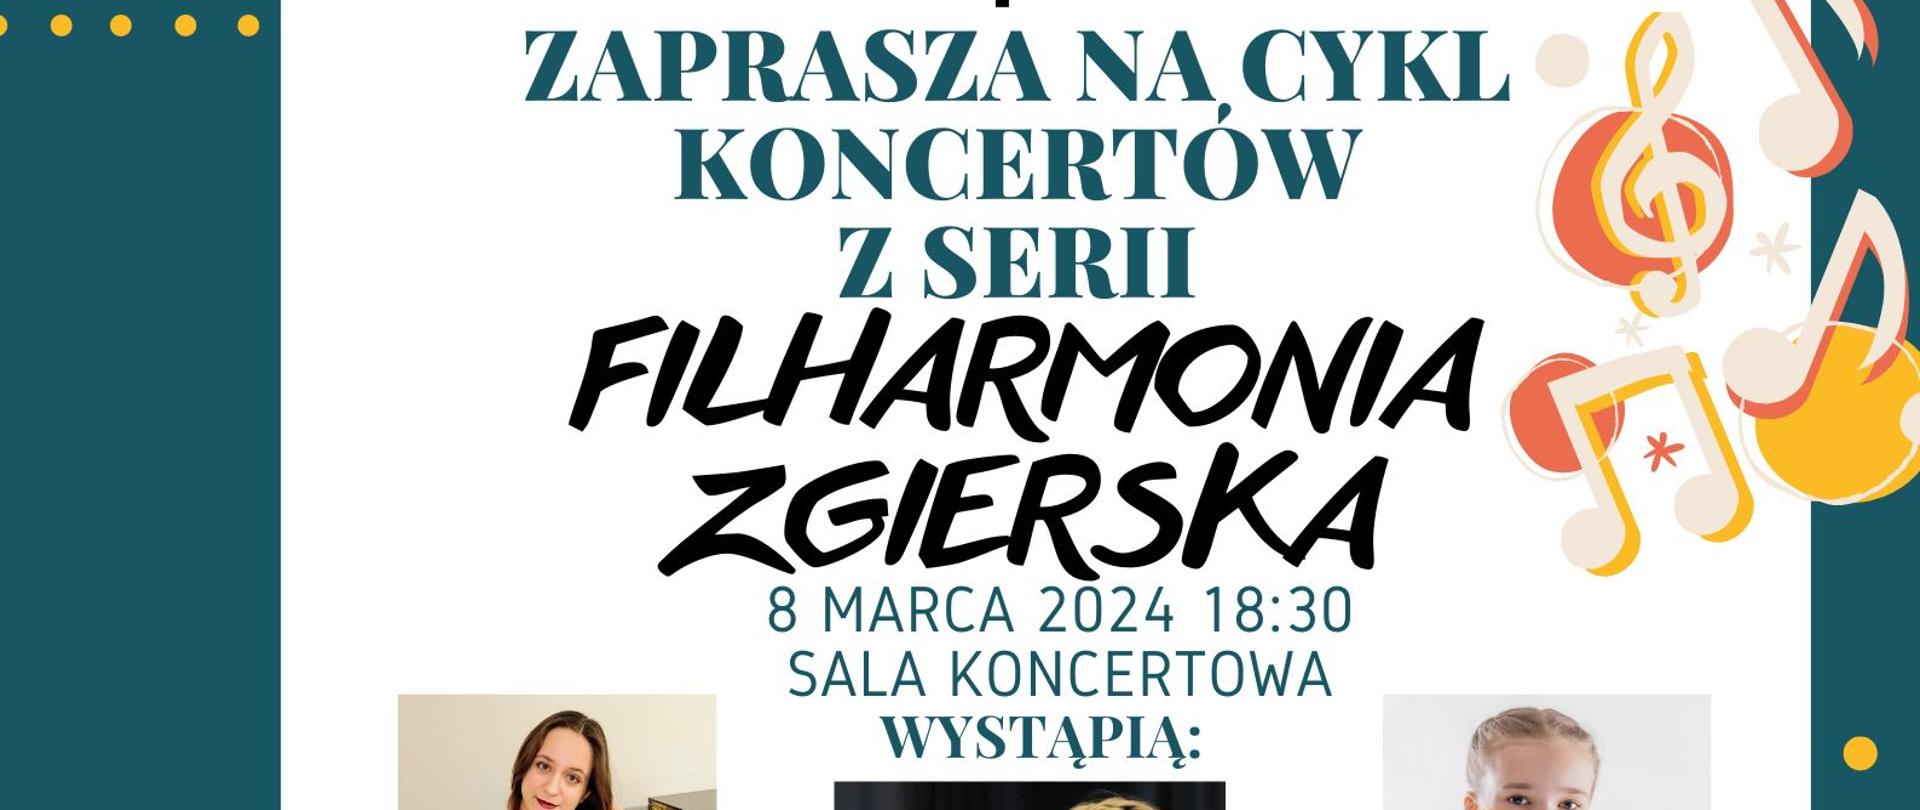 Filharmonia zgierska 8.03.2024